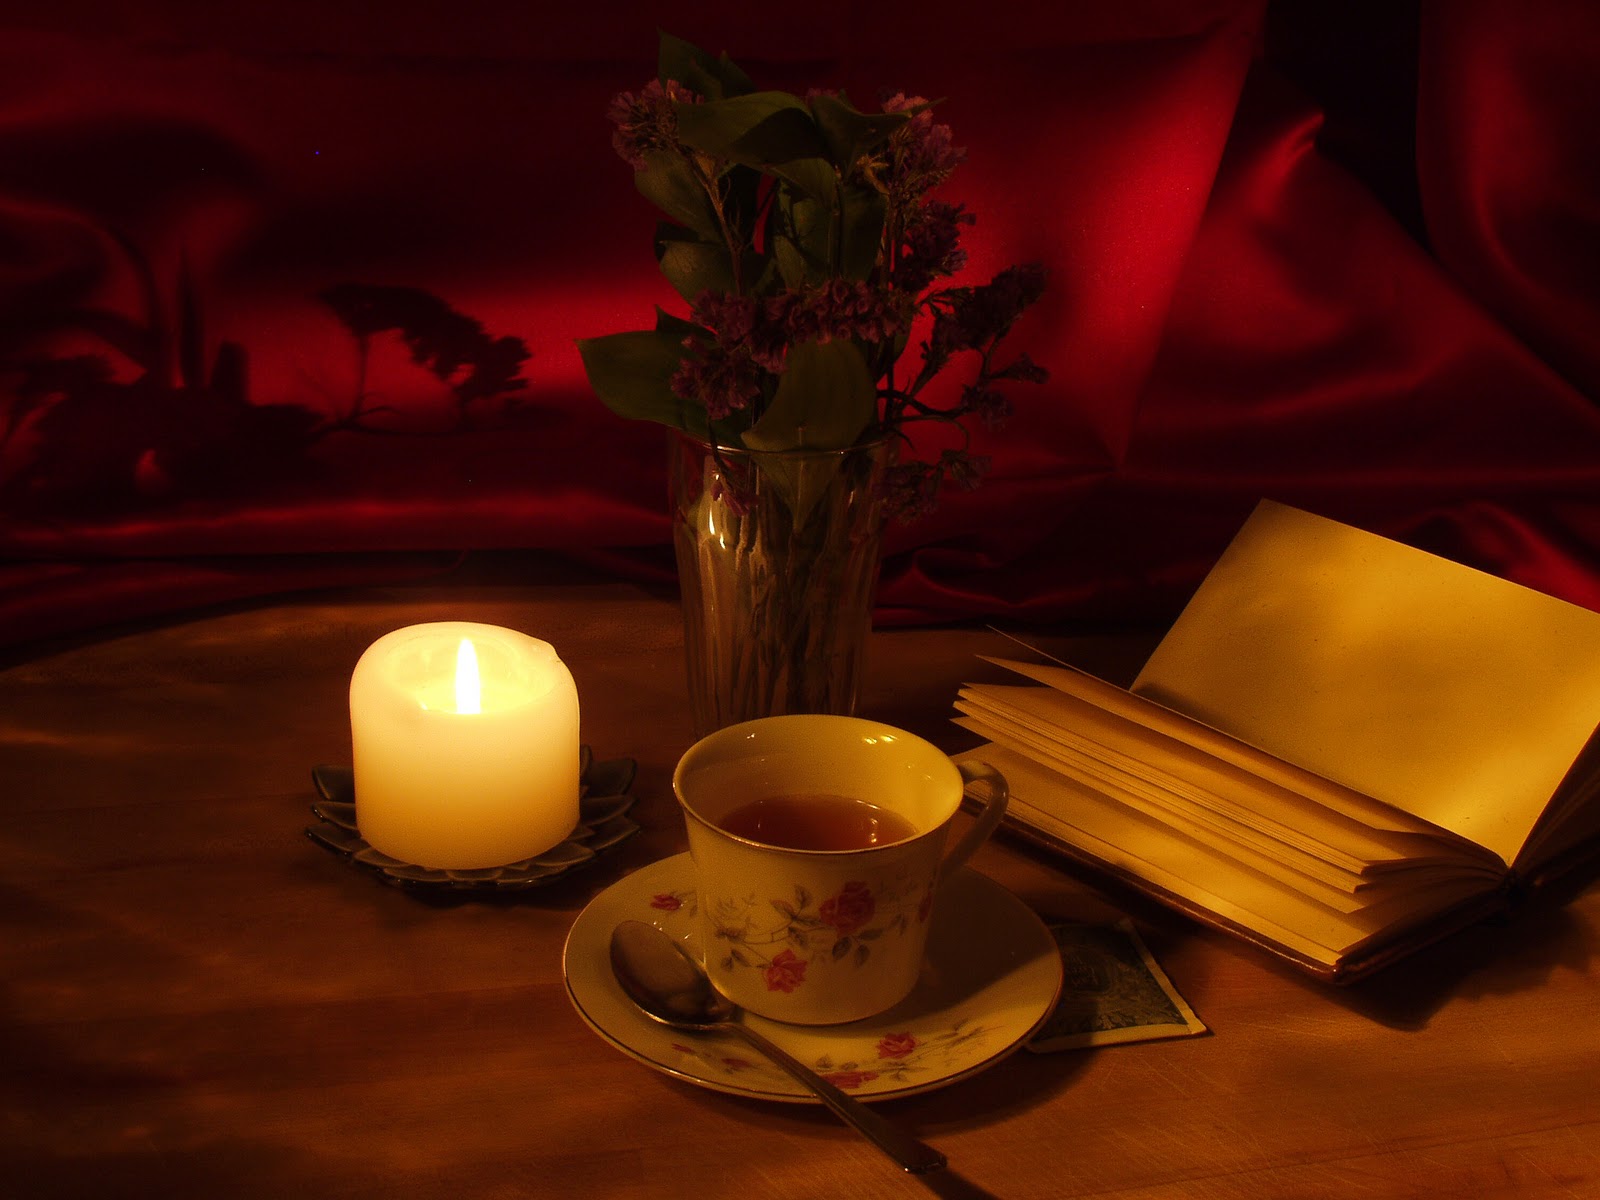 Tea Leaves: Tea, Book, and Candle